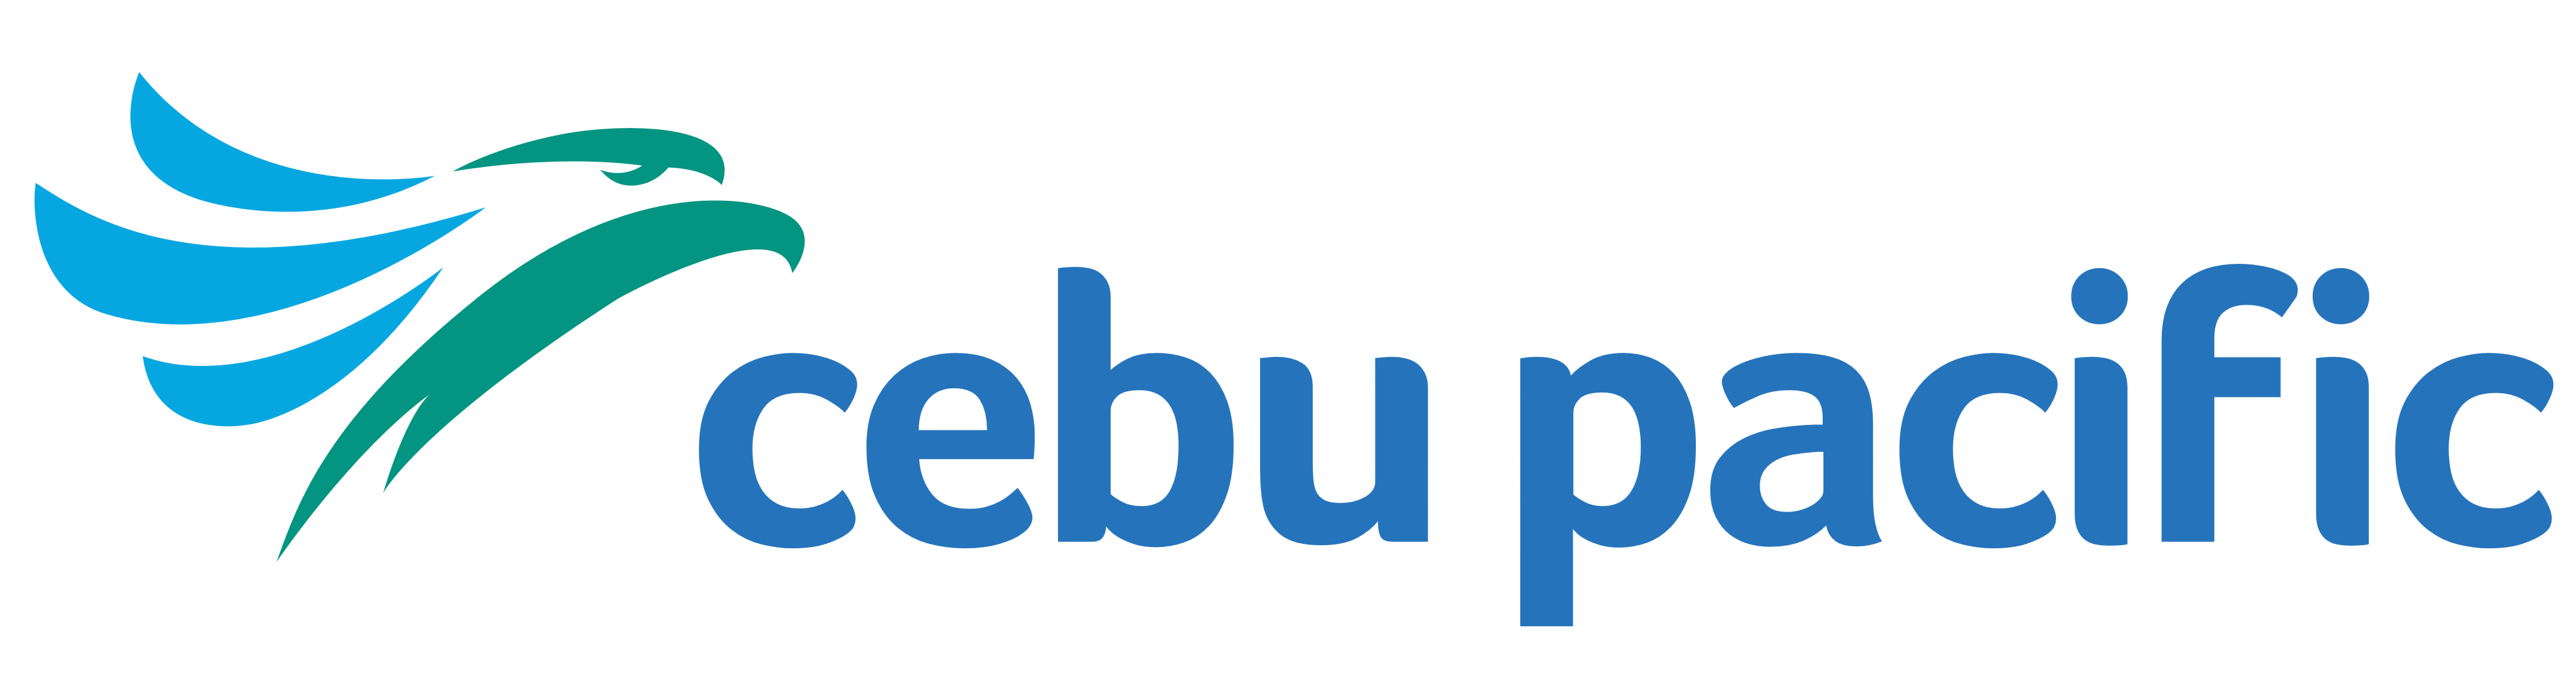 Cebu Pacific Air logo, logotype